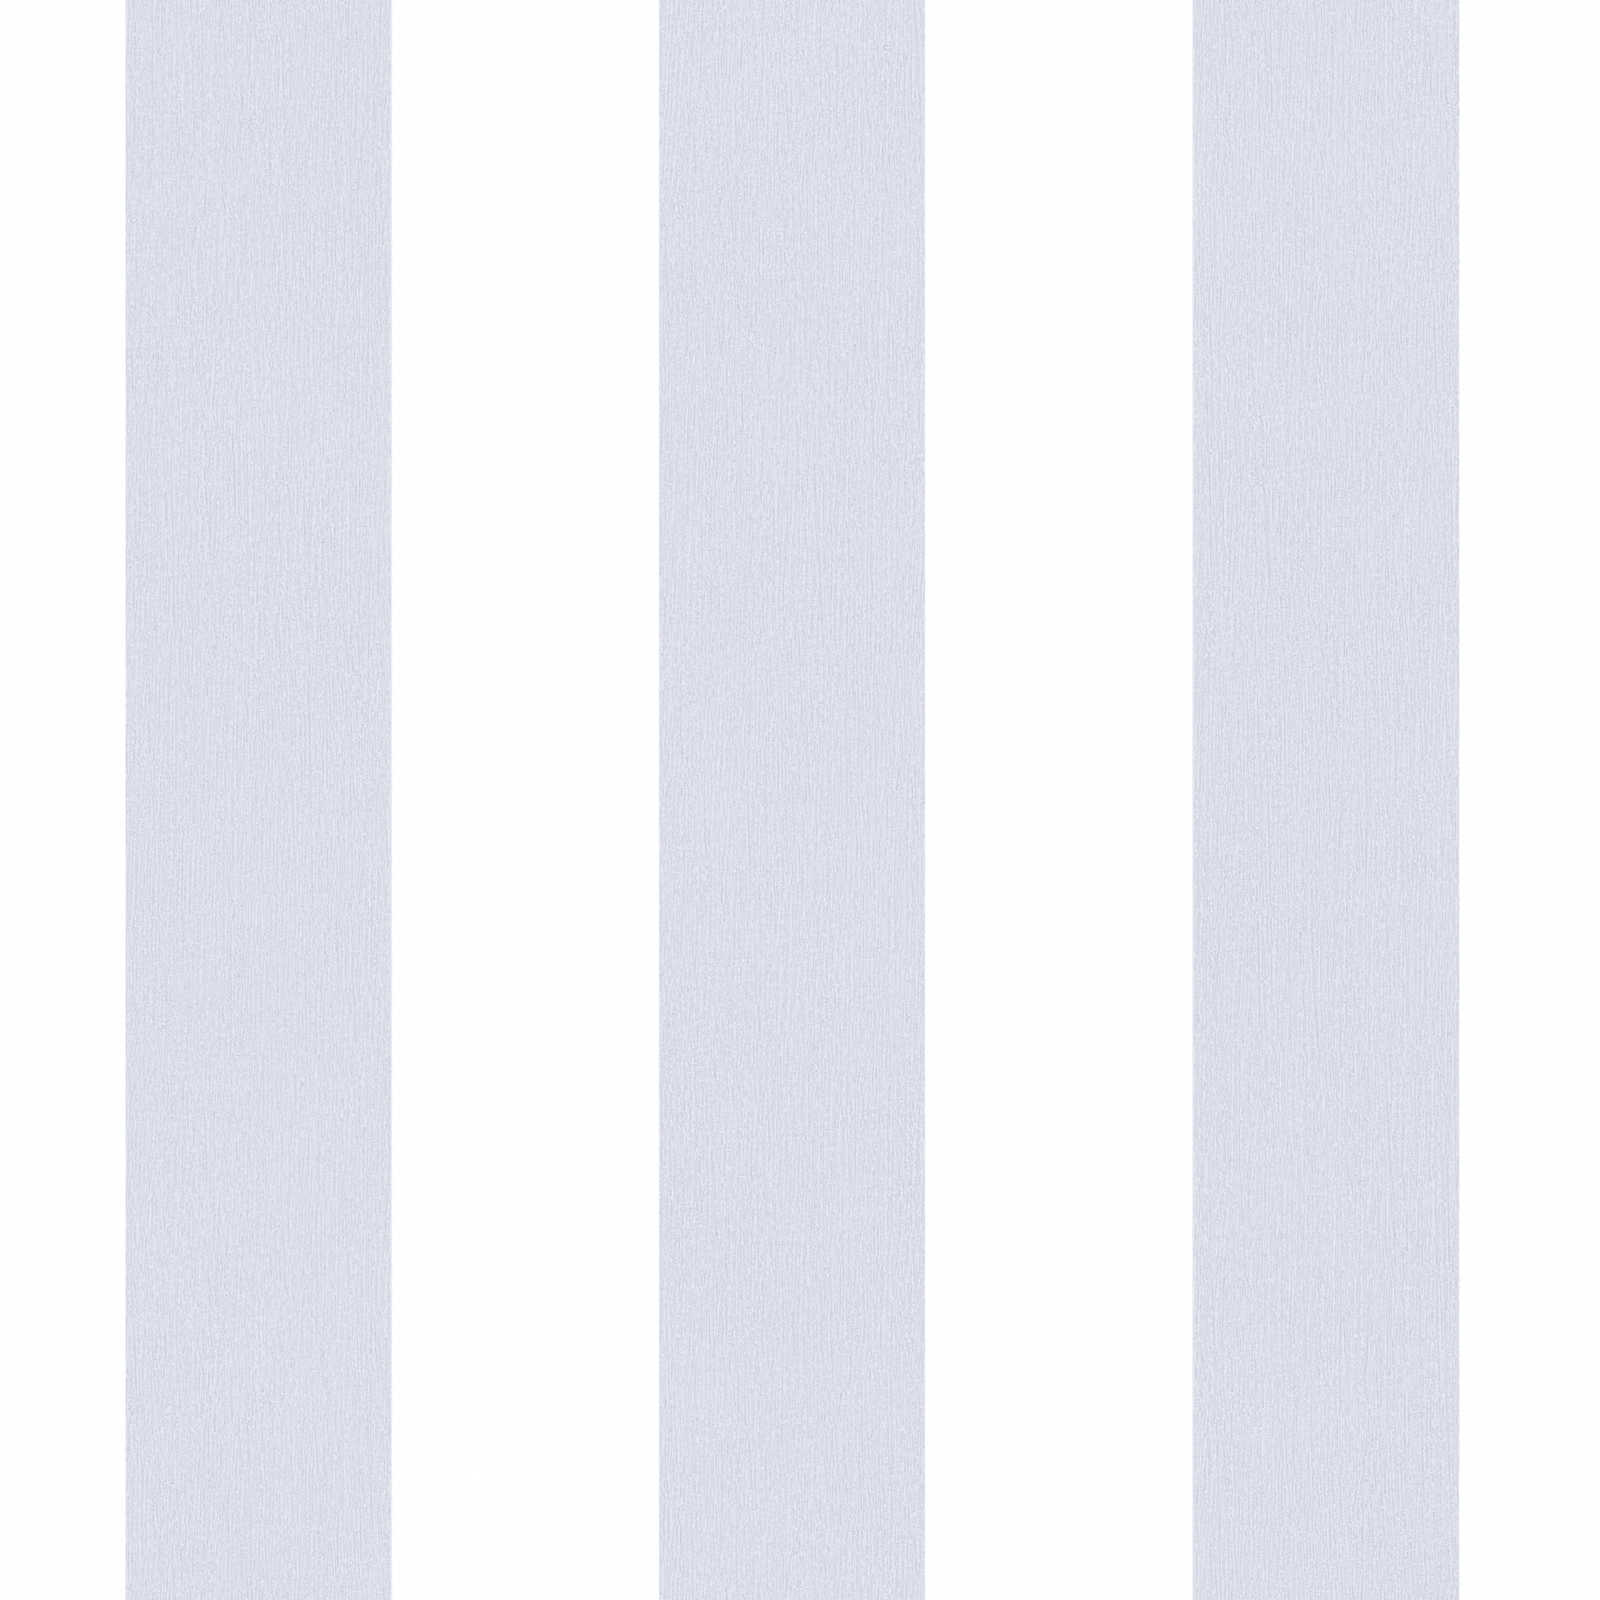 Wallpaper Nursery vertical stripes - grey, white
